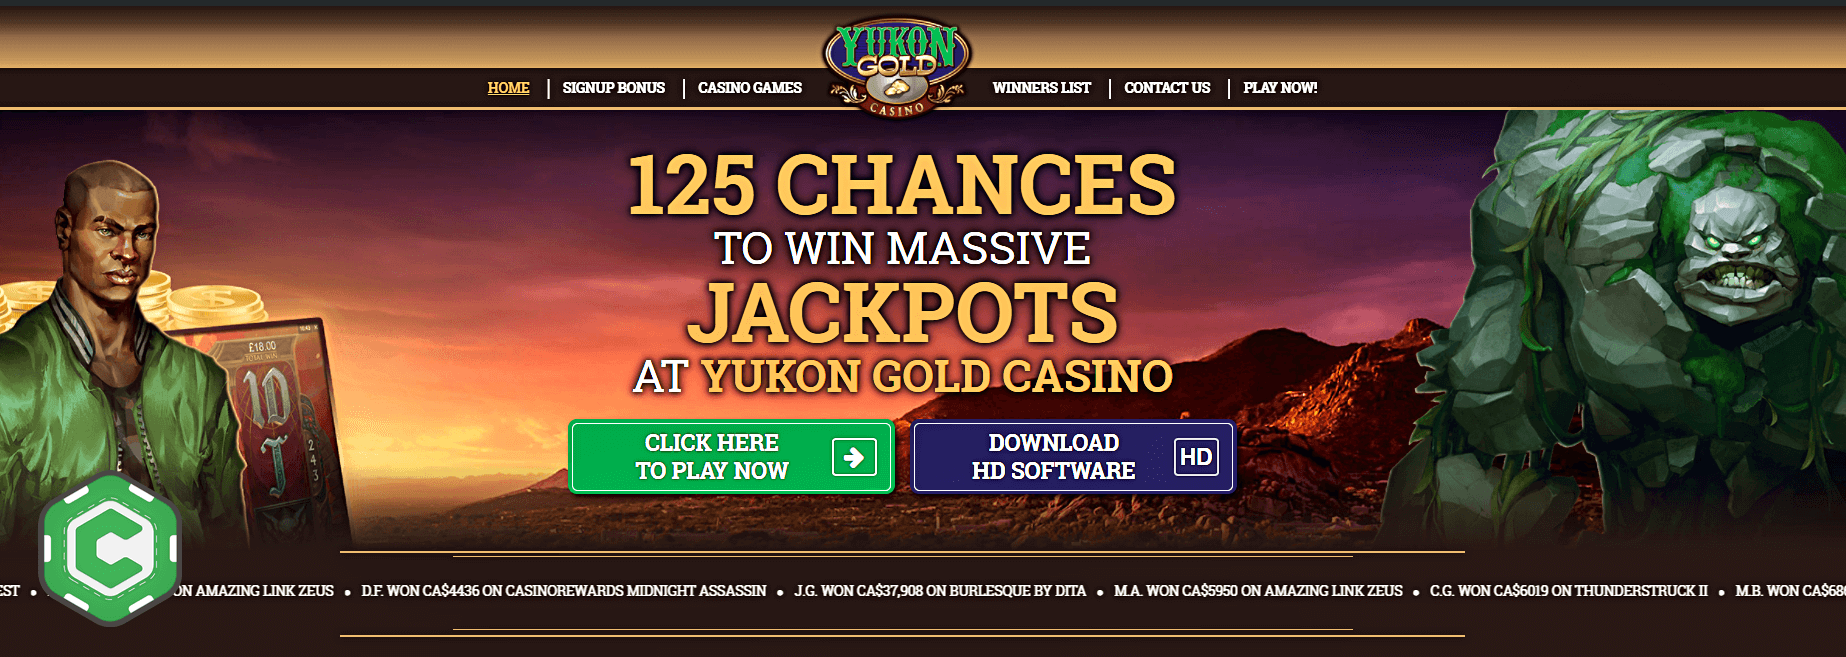 Yukon Gold Casino Website